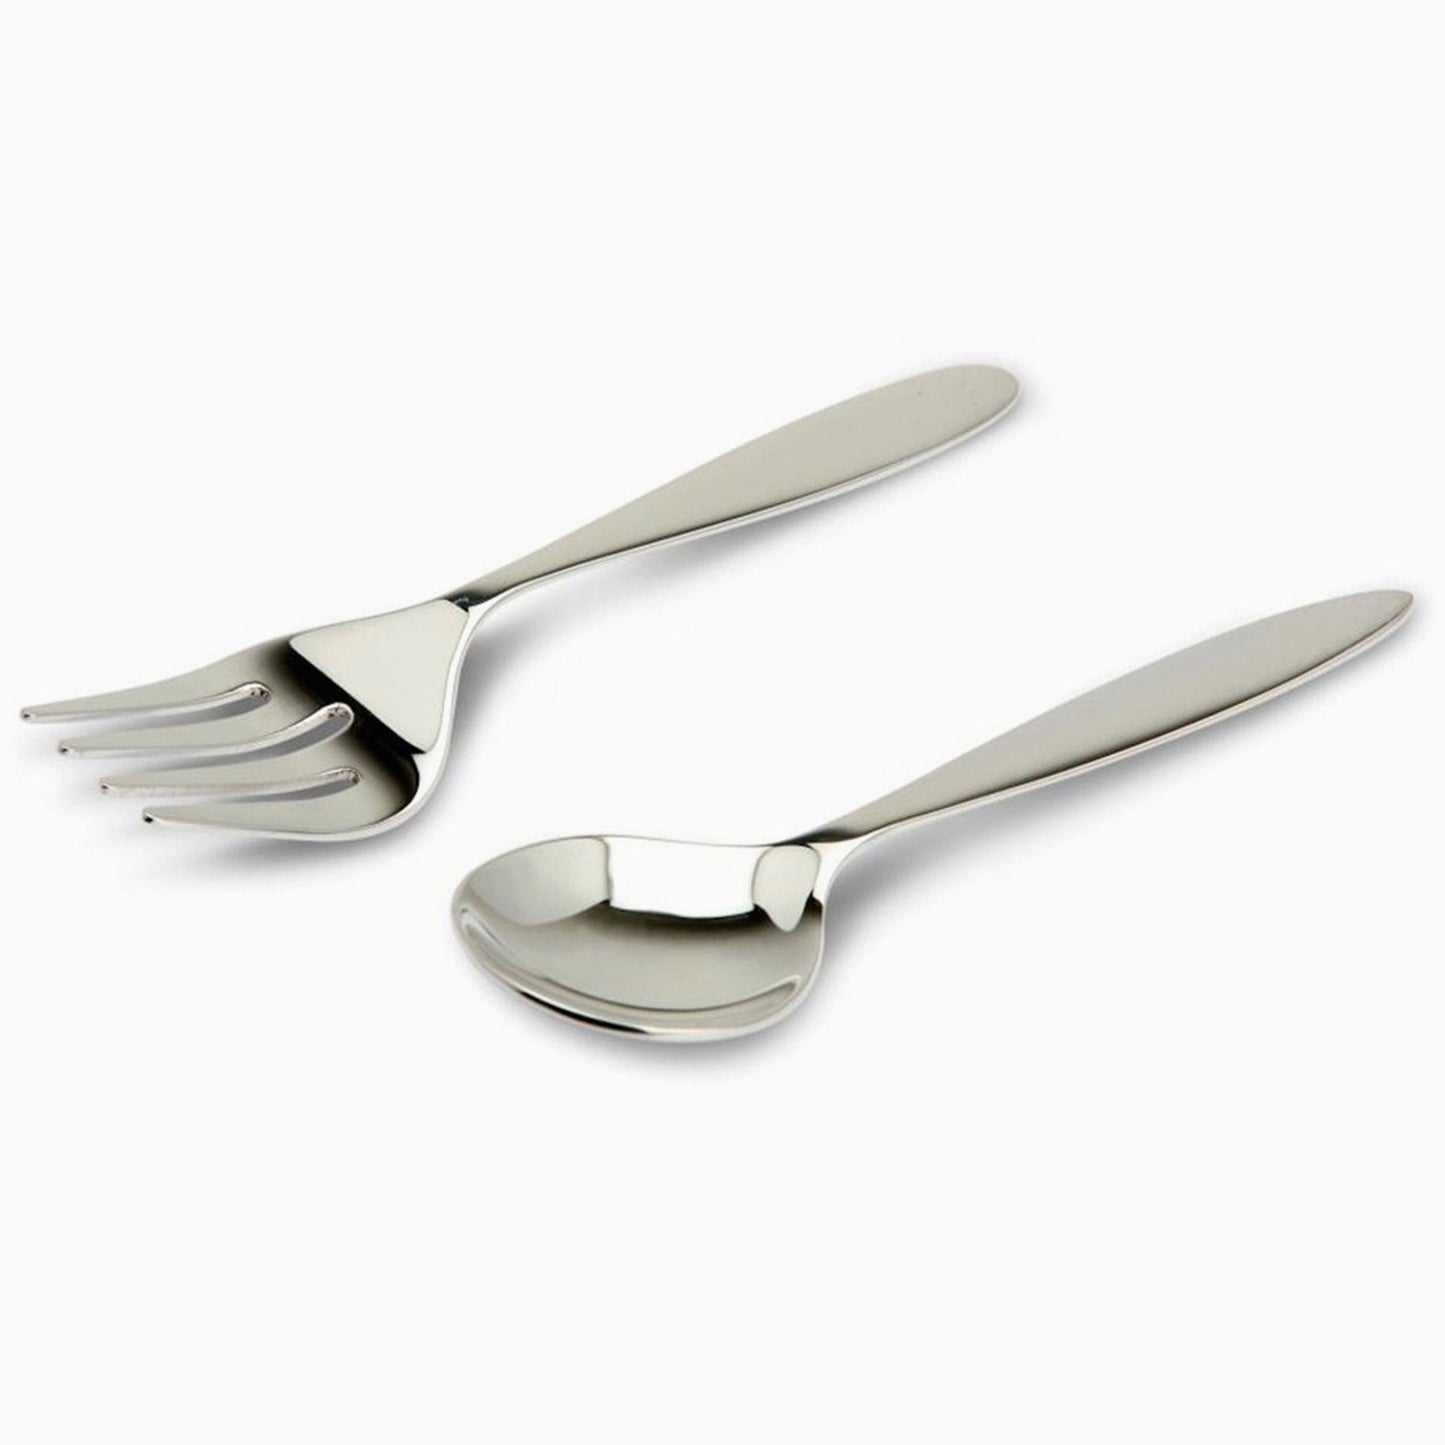 Classic Sterling Silver Baby Spoon & Fork set by Krysaliis